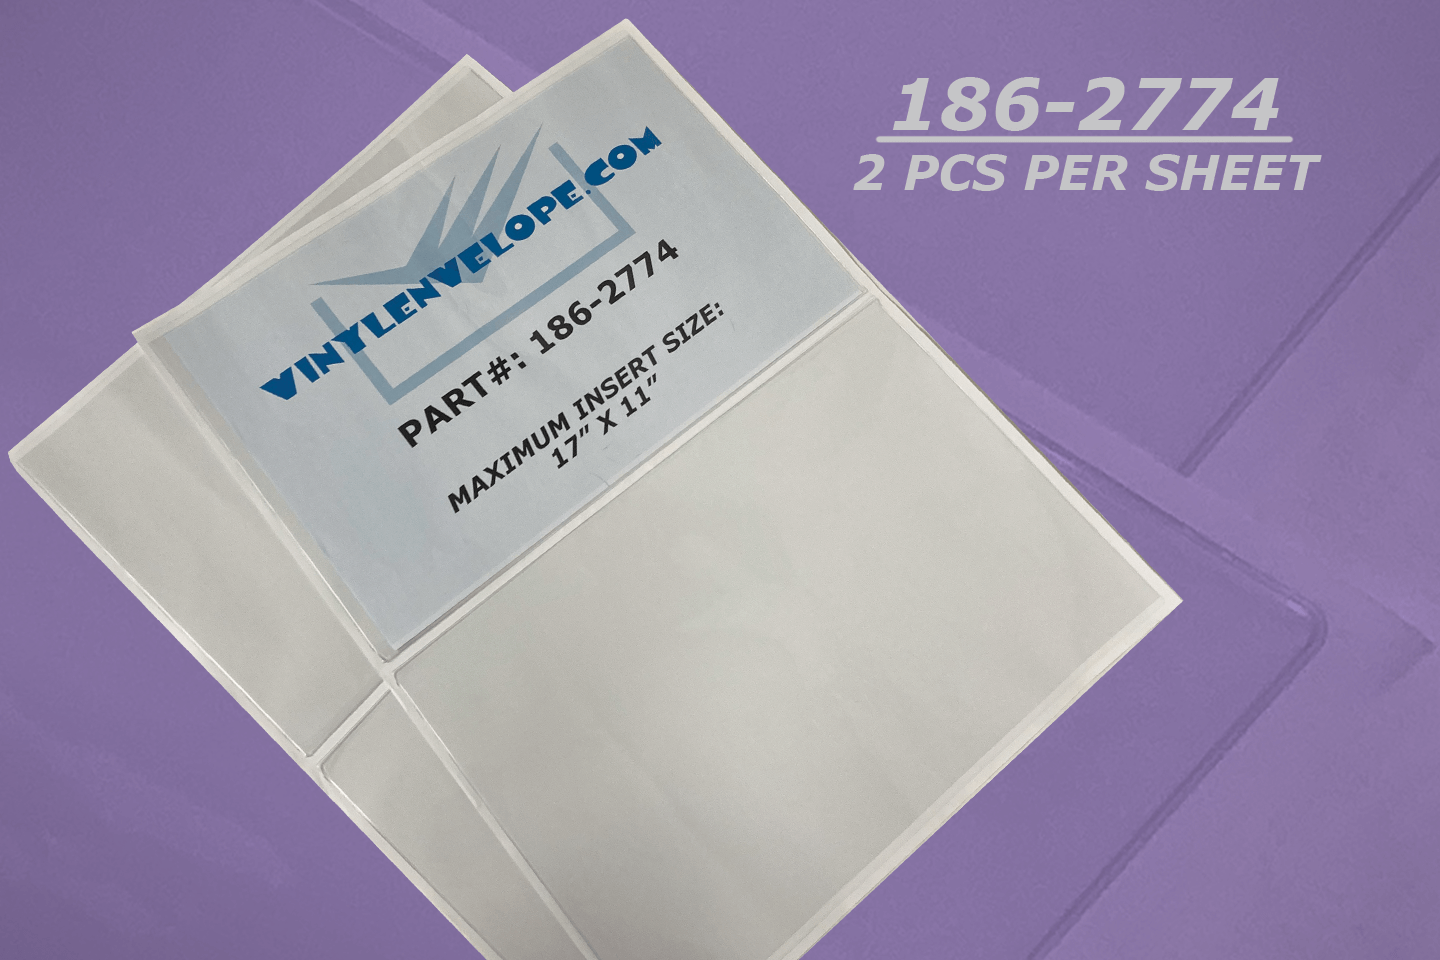 17" x 11" Press-on vinyl envelope OPEN LONG